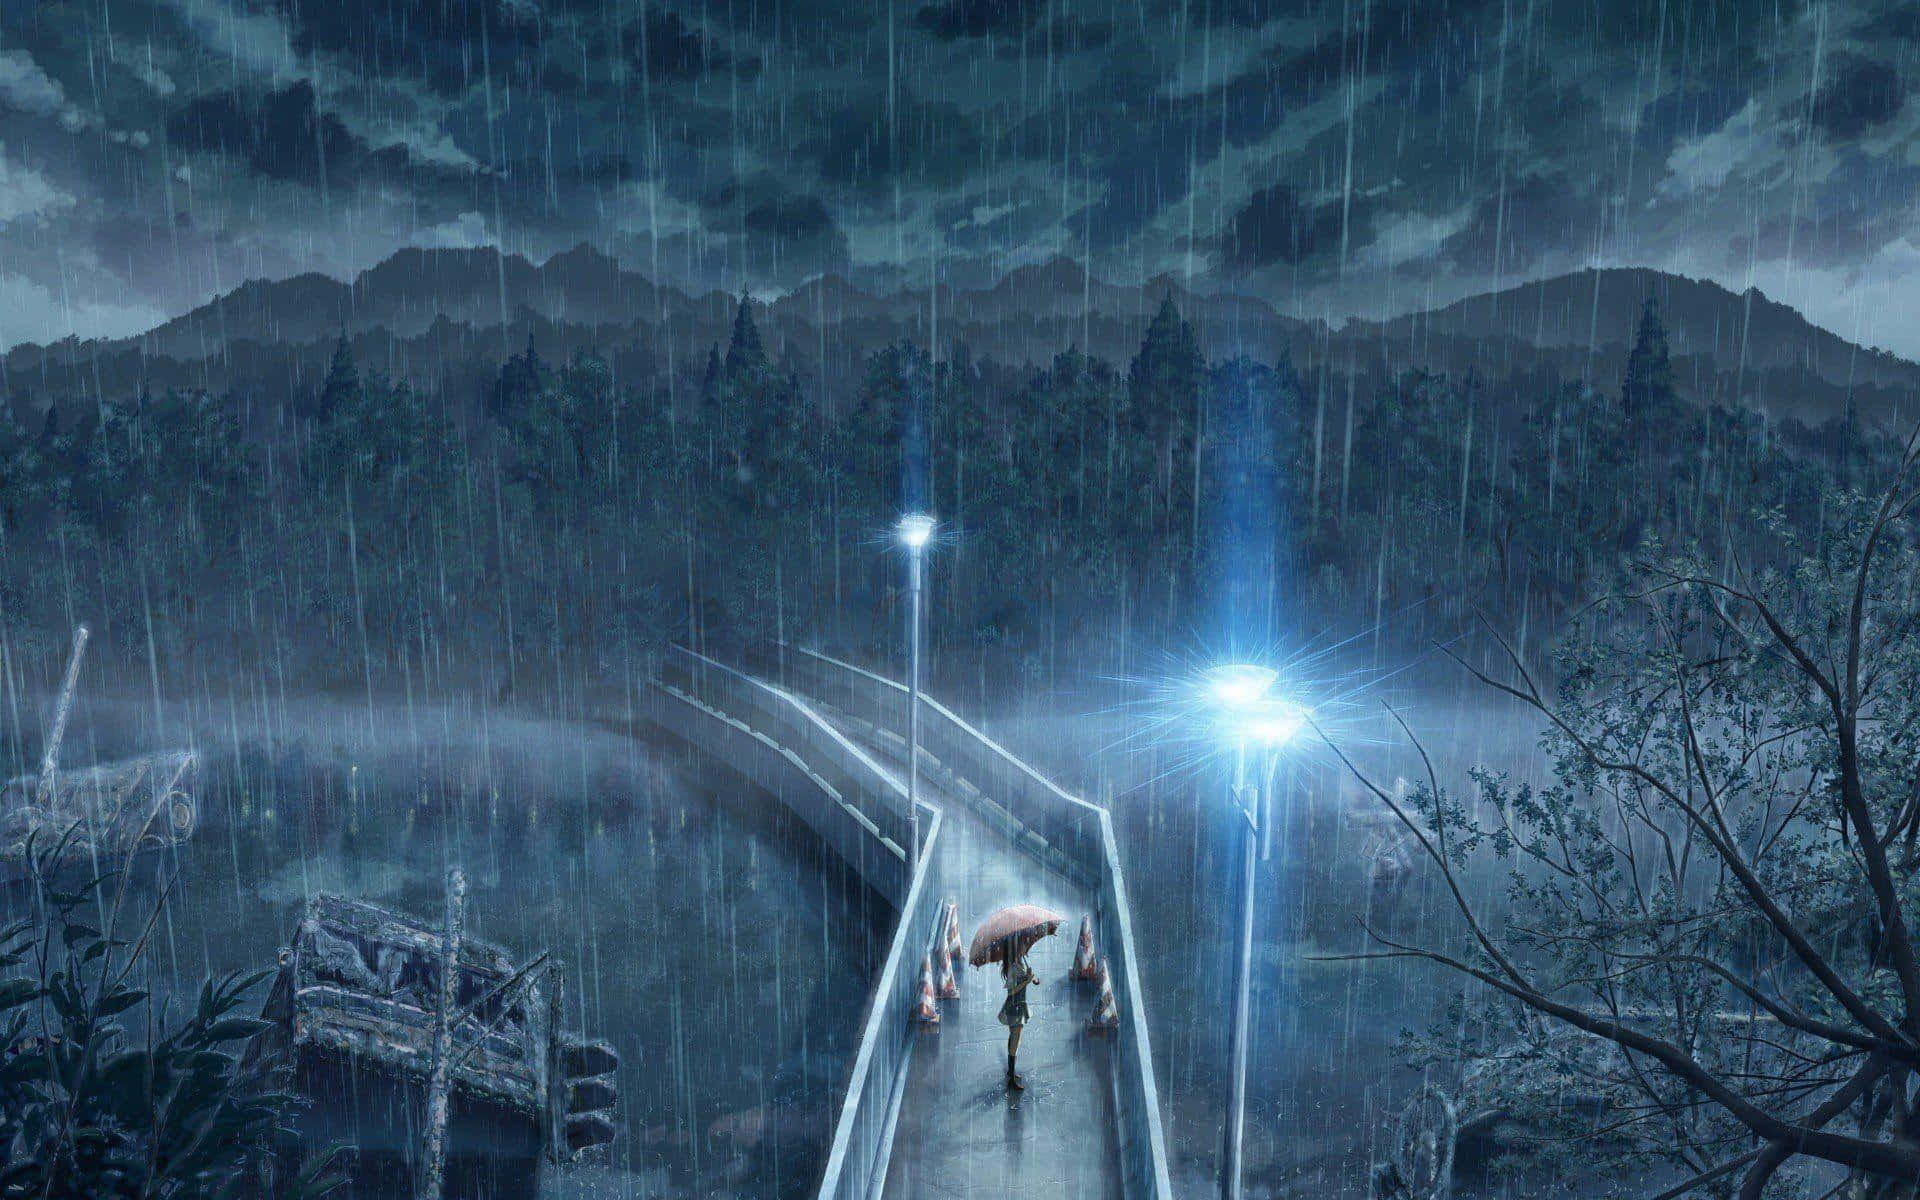 Anime Art Of Bridge On A Rainy Day Picture